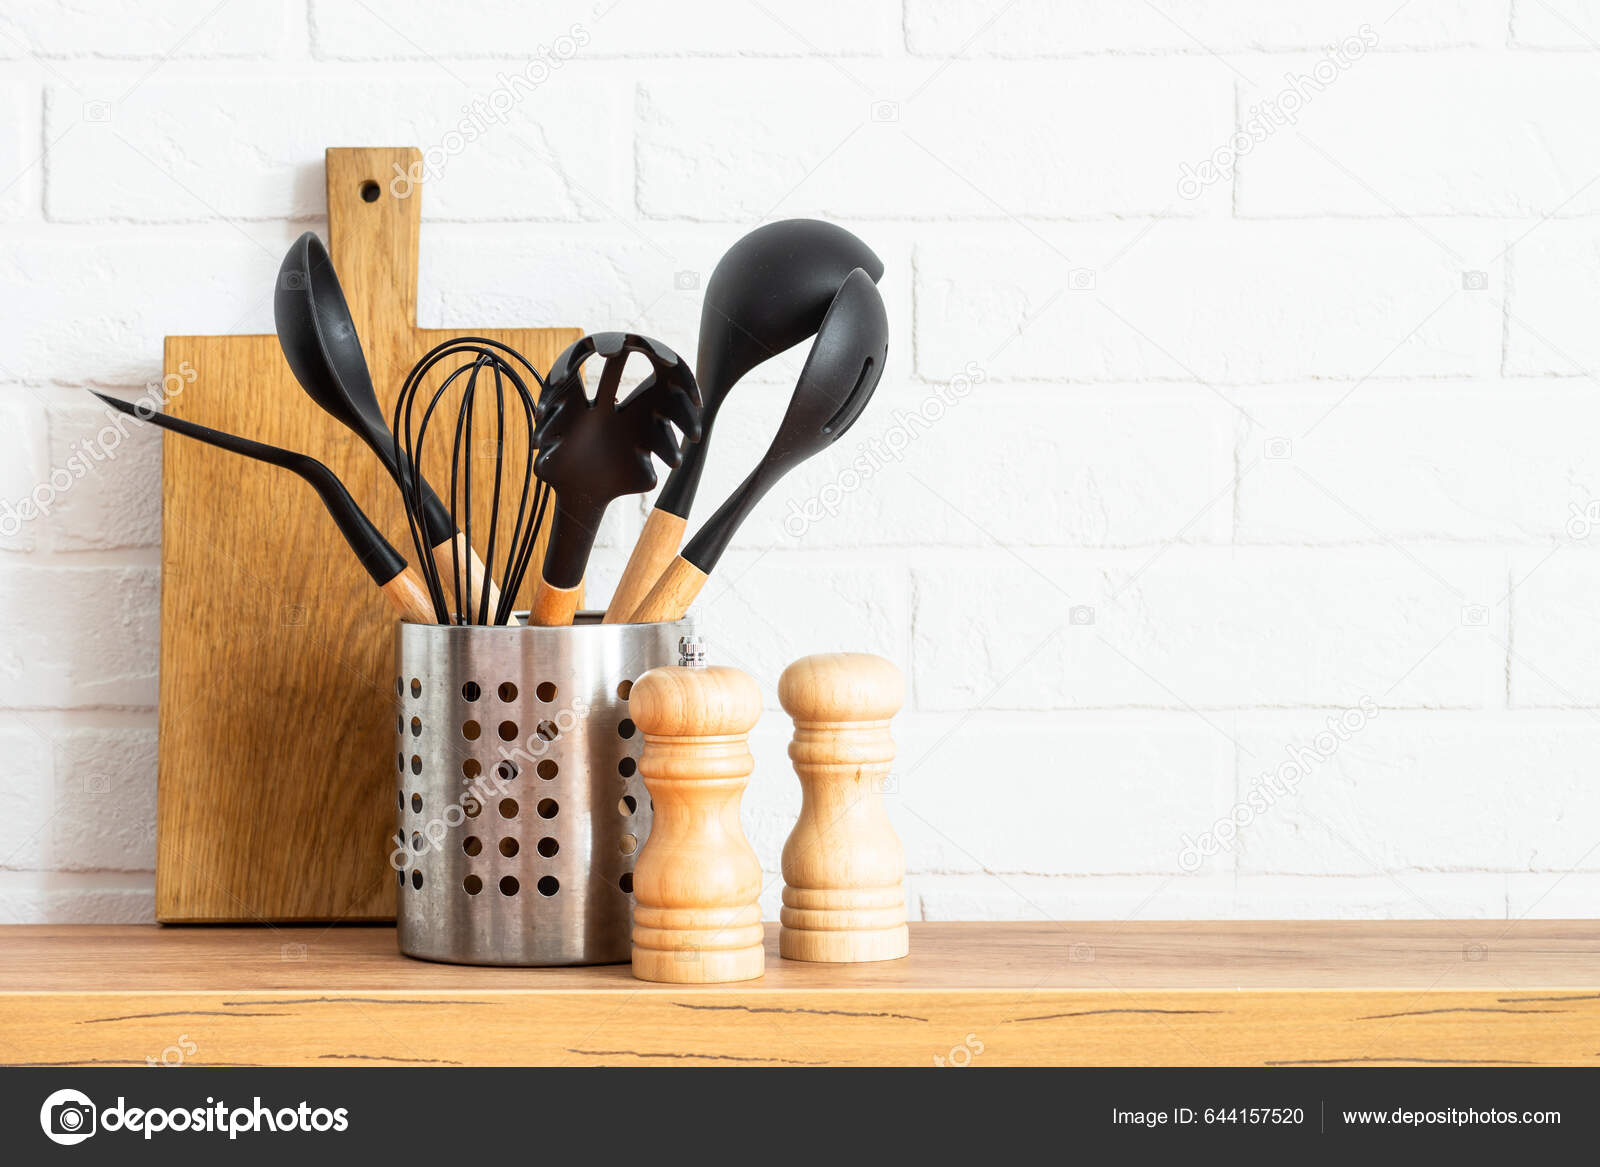 https://st5.depositphotos.com/1558912/64415/i/1600/depositphotos_644157520-stock-photo-kitchen-utensils-cooking-tools-wooden.jpg